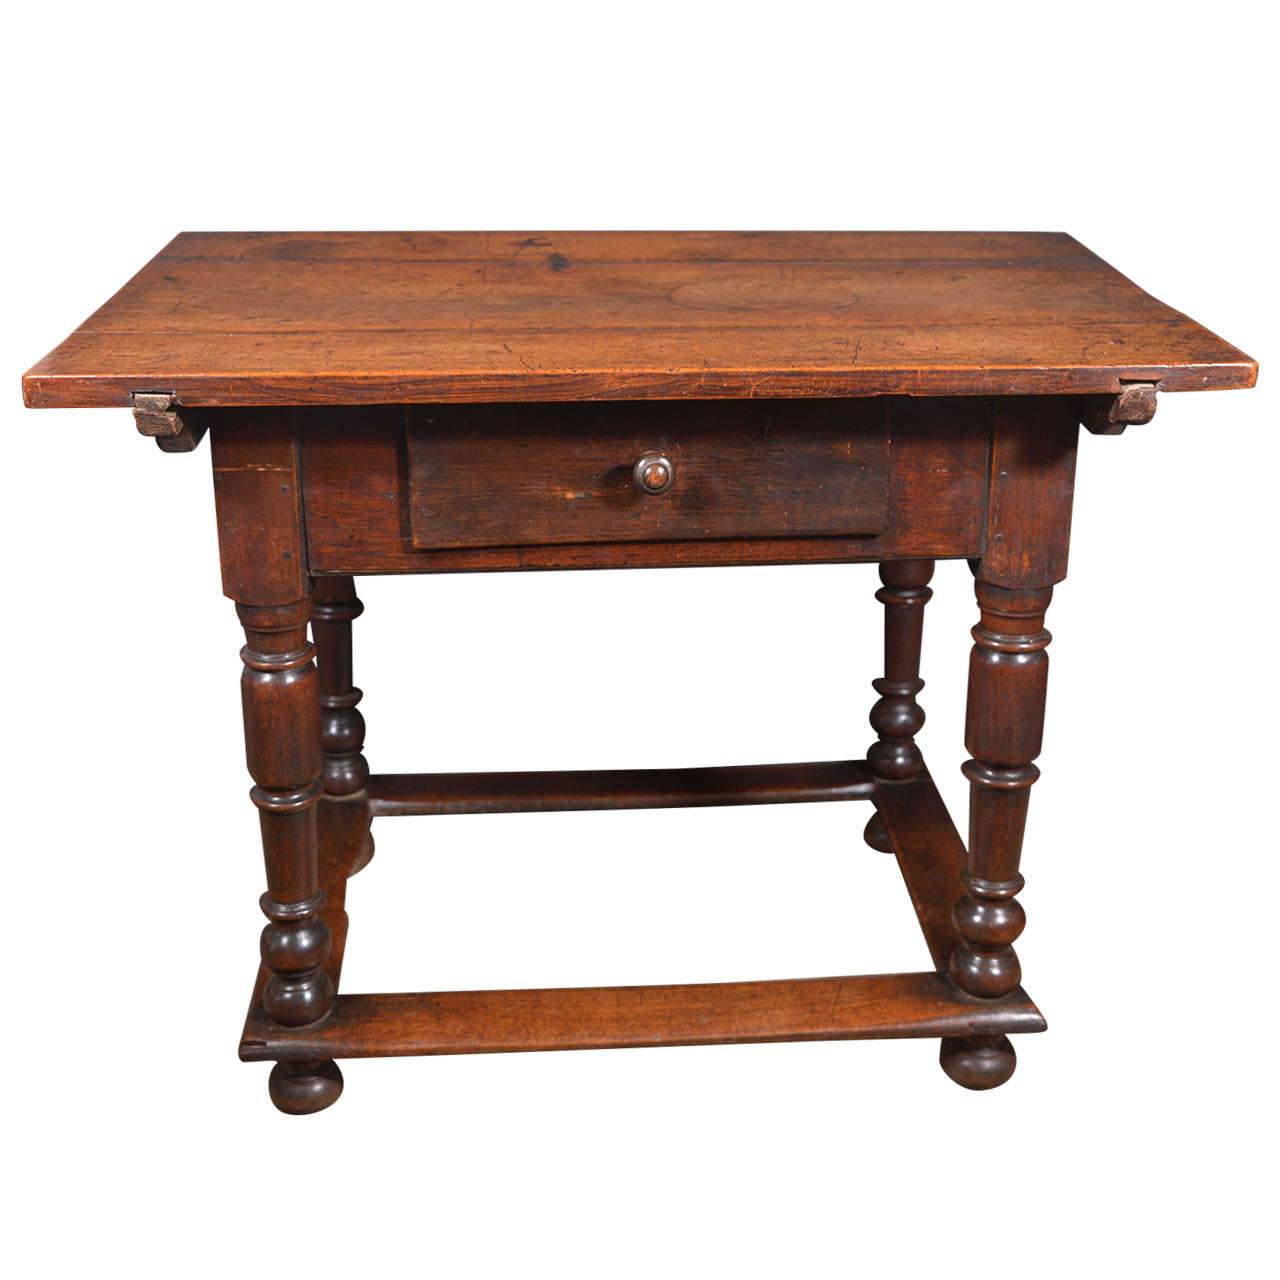 17th c. Italian Landowner's table in Walnut